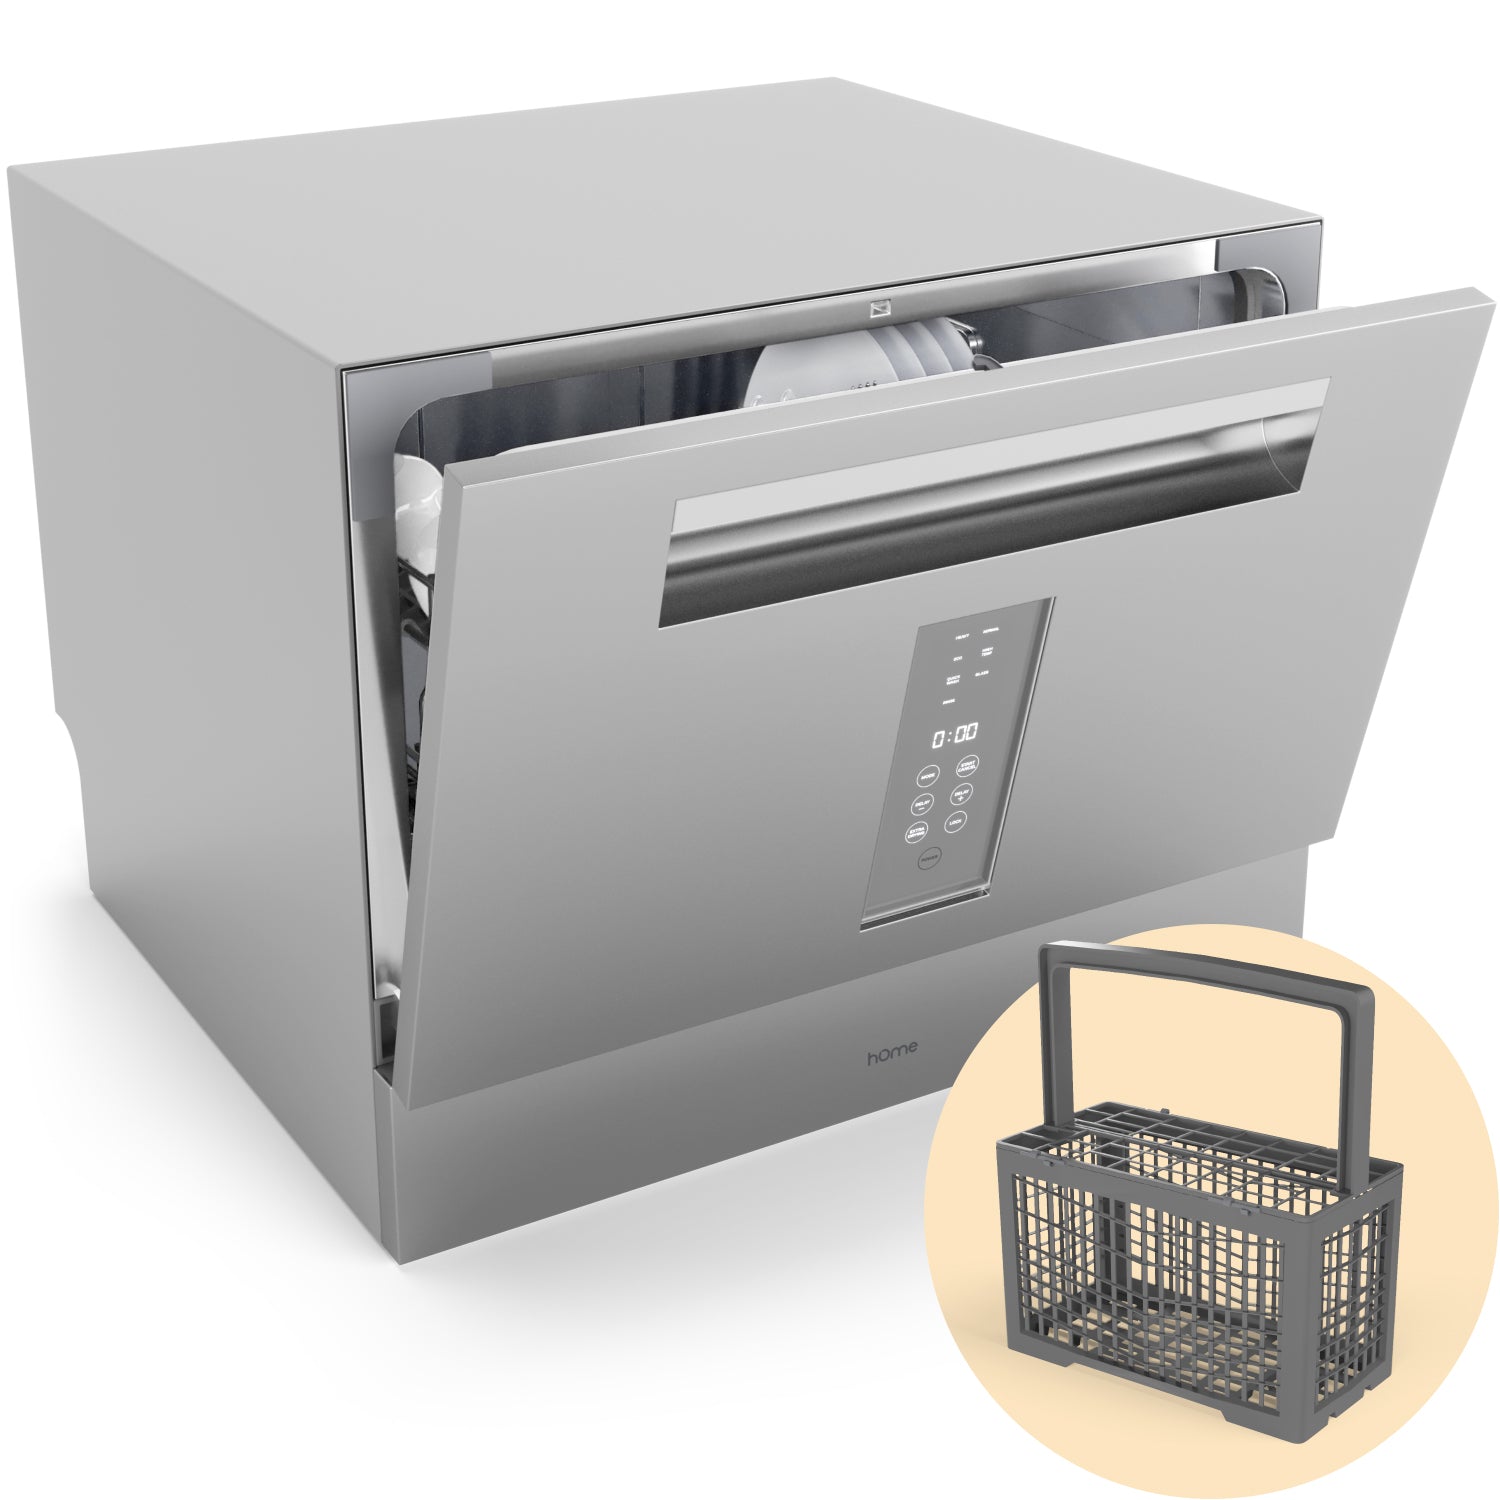 Countertop Dishwasher - Digital